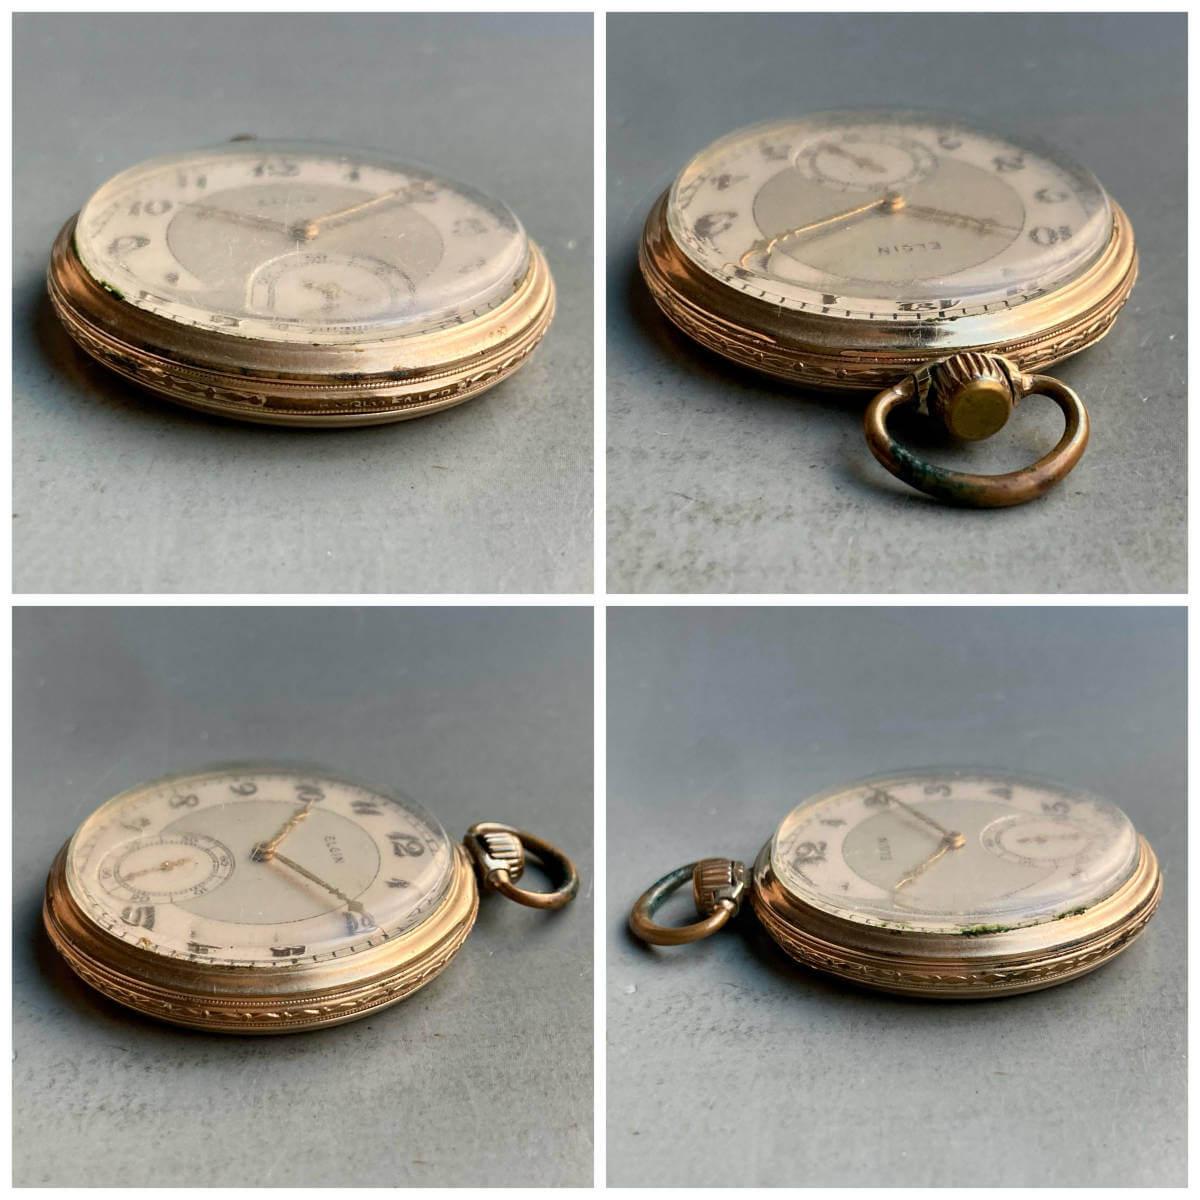 Elgin Pocket Watch Antique Manual Open Face 44mm Vintage - Murphy Johnson Watches Co.